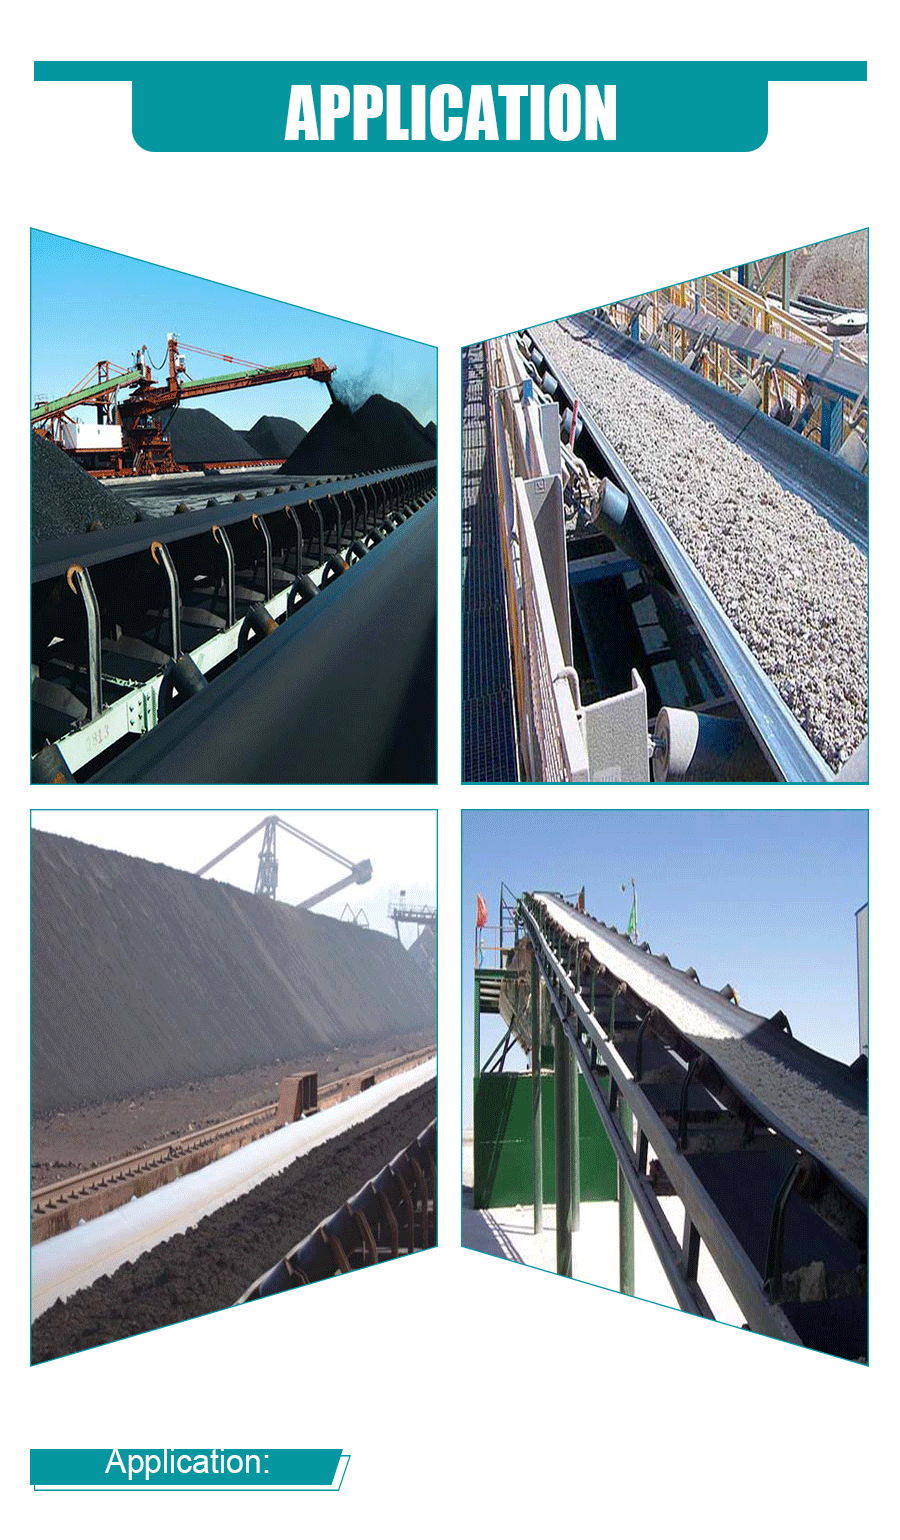 Material conveyor belt